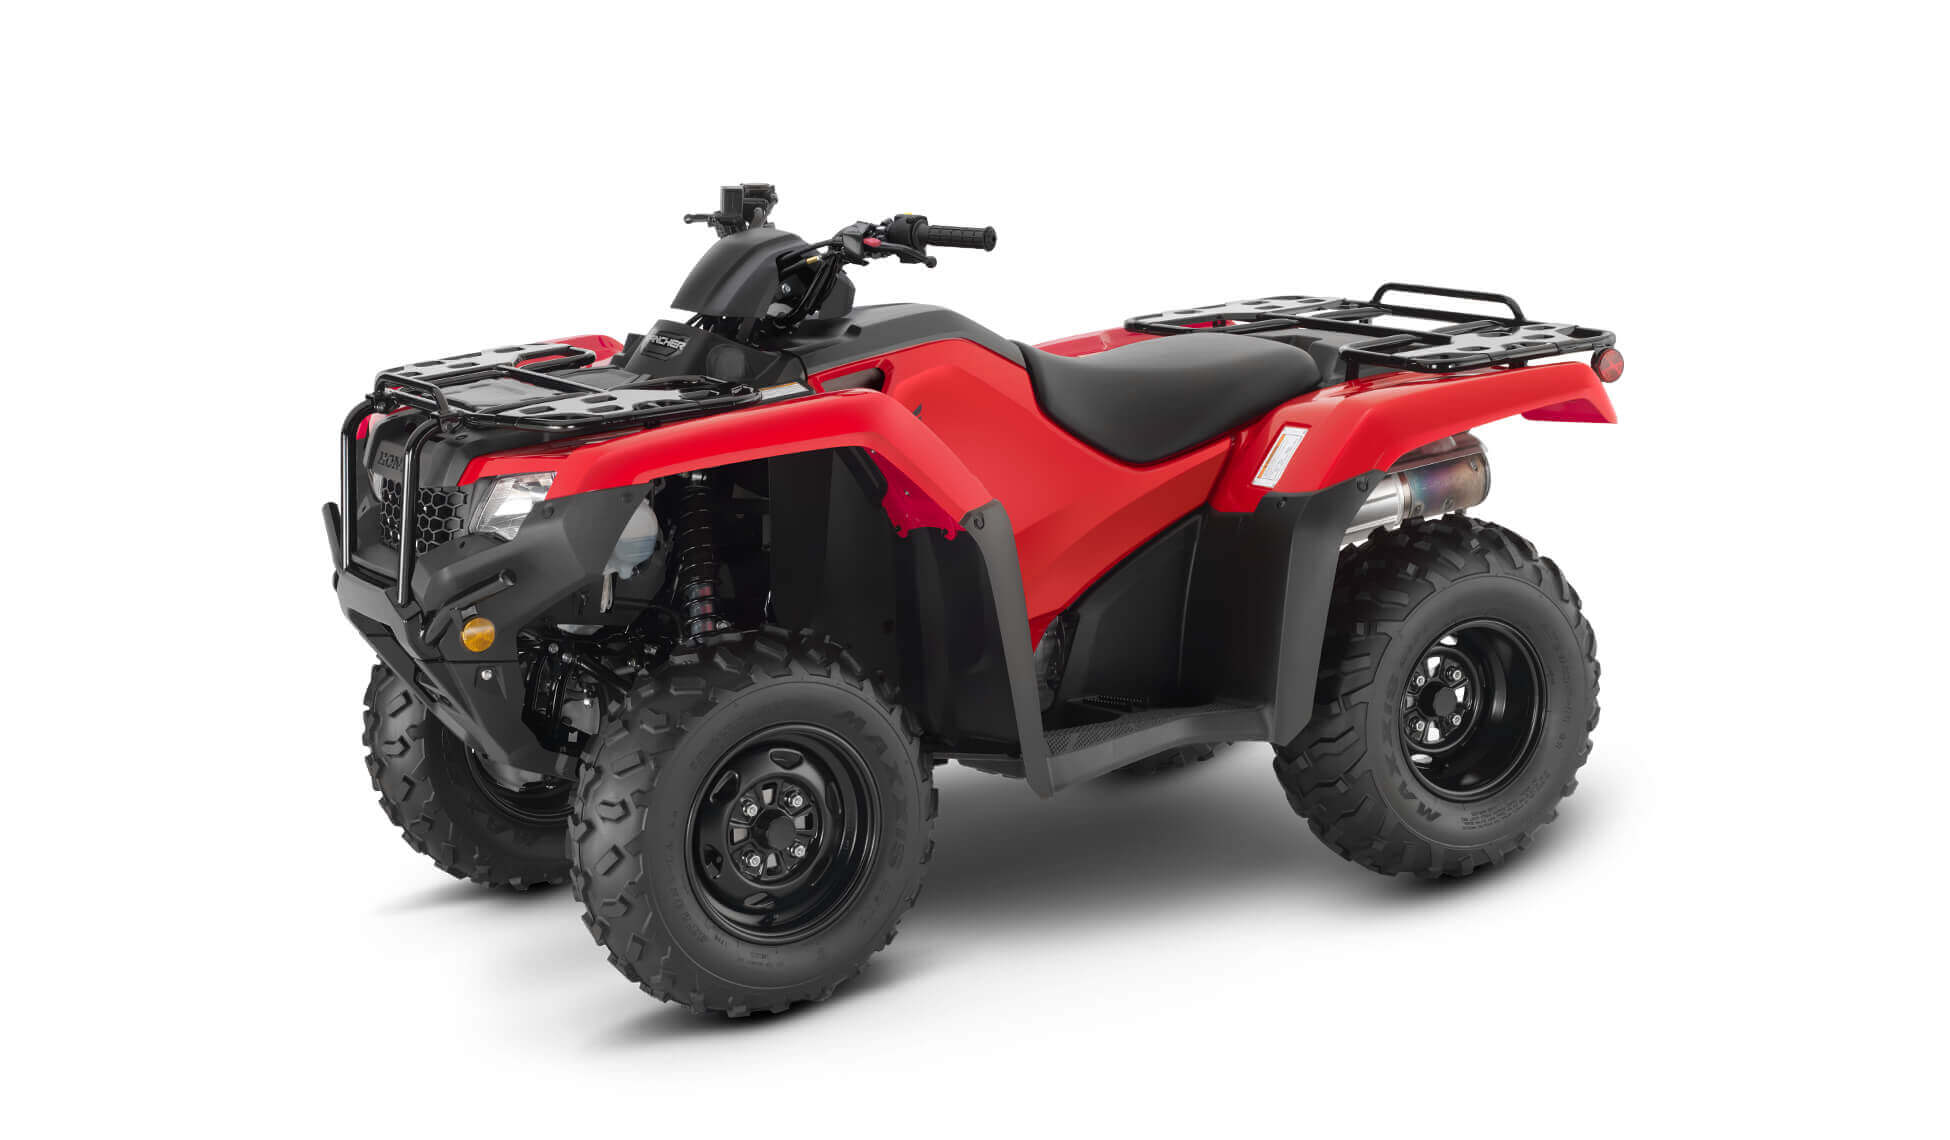 2021 Honda Rancher 420 EPS 4x4 ATV Review / Specs TRX420FM2 FourTrax